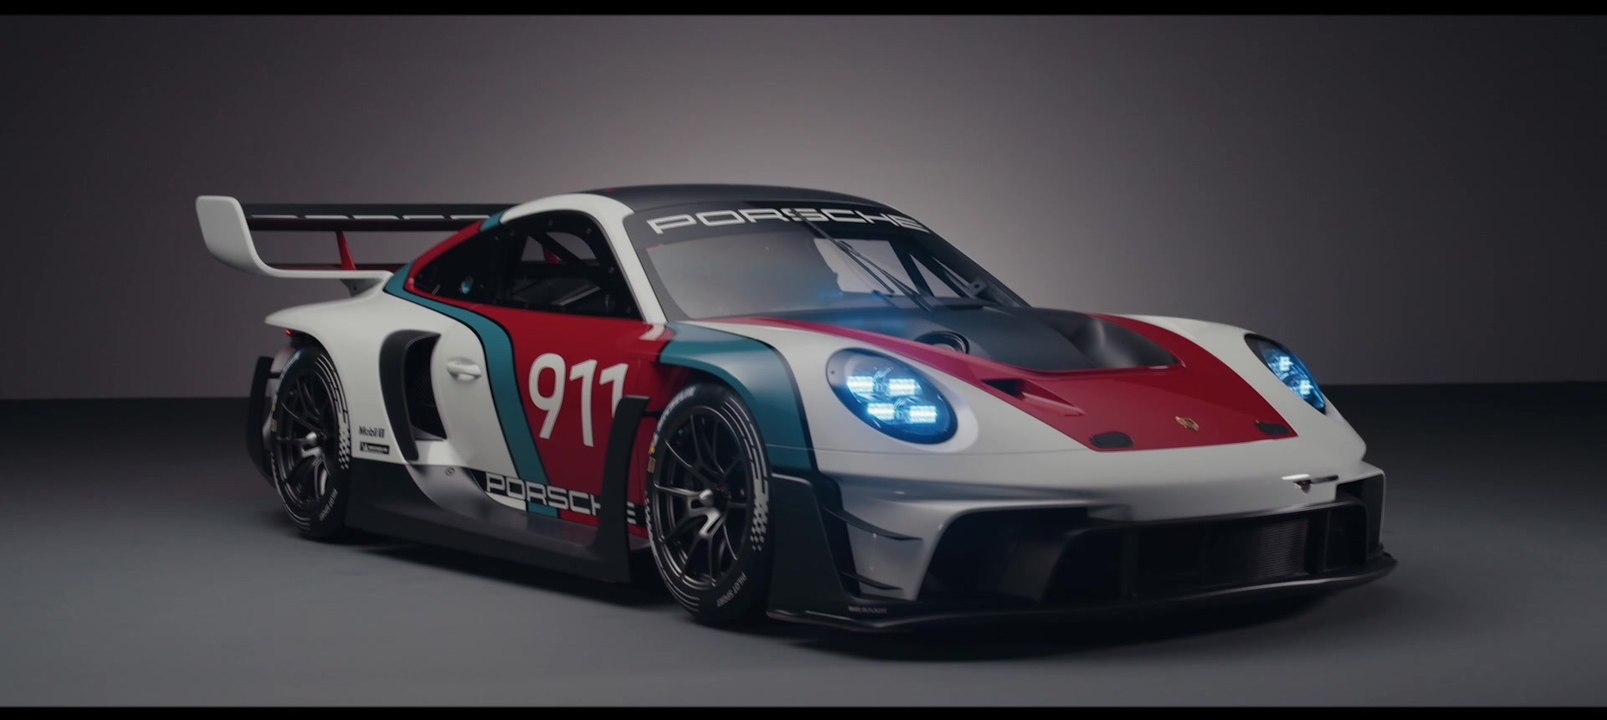 Präsentation des Porsche 911 GT3 R rennsport - Sportmade